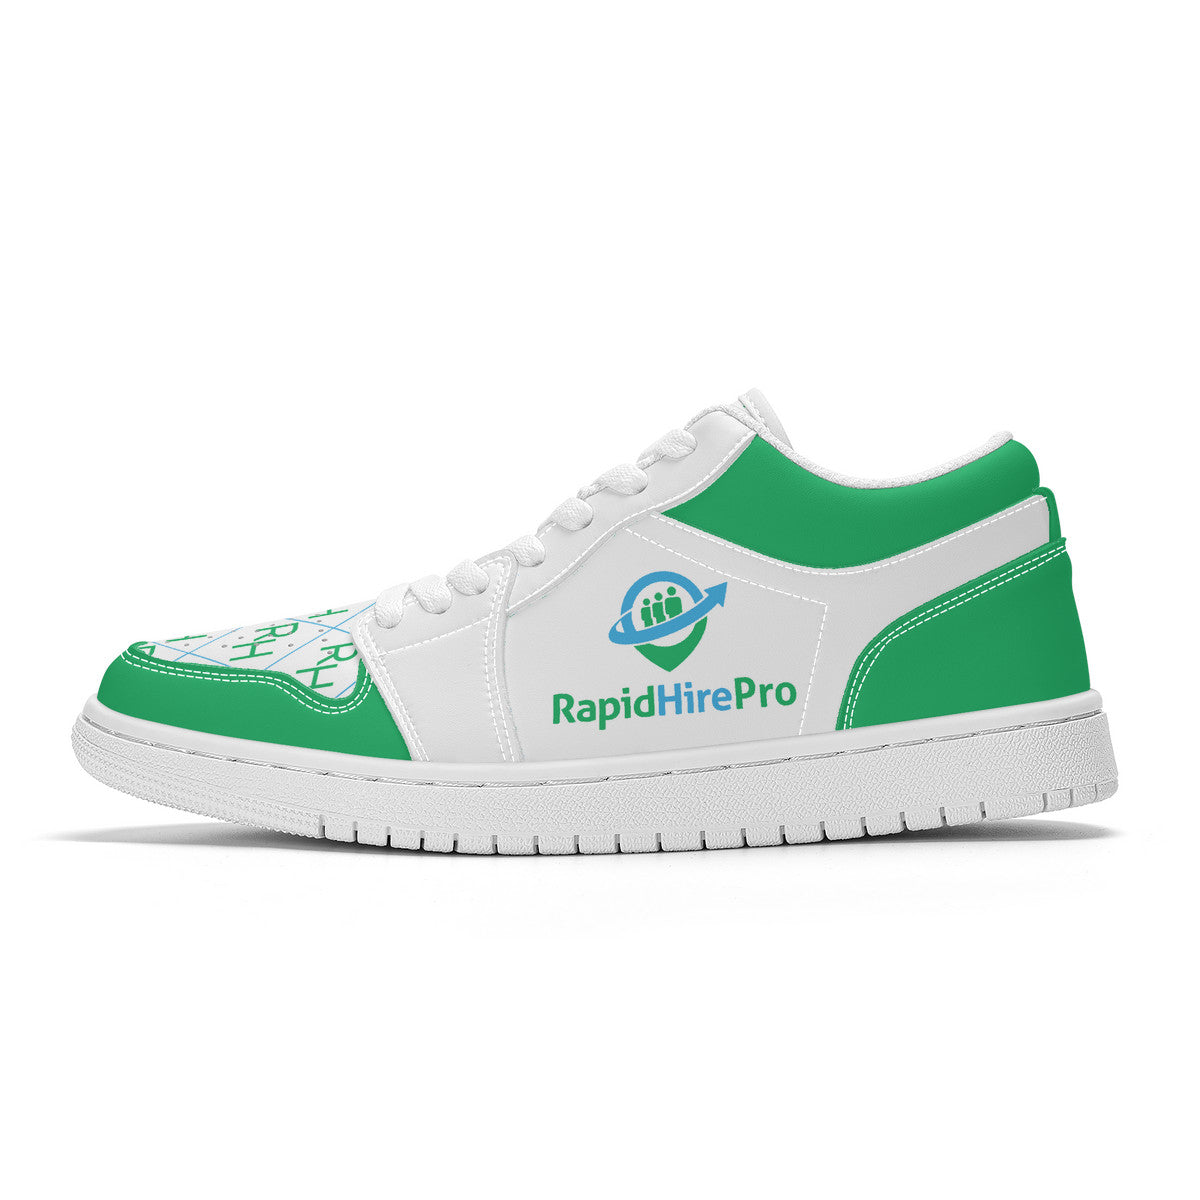 Rapid Hire Pro | Custom Business Shoe - Green and Blue - Shoe Zero